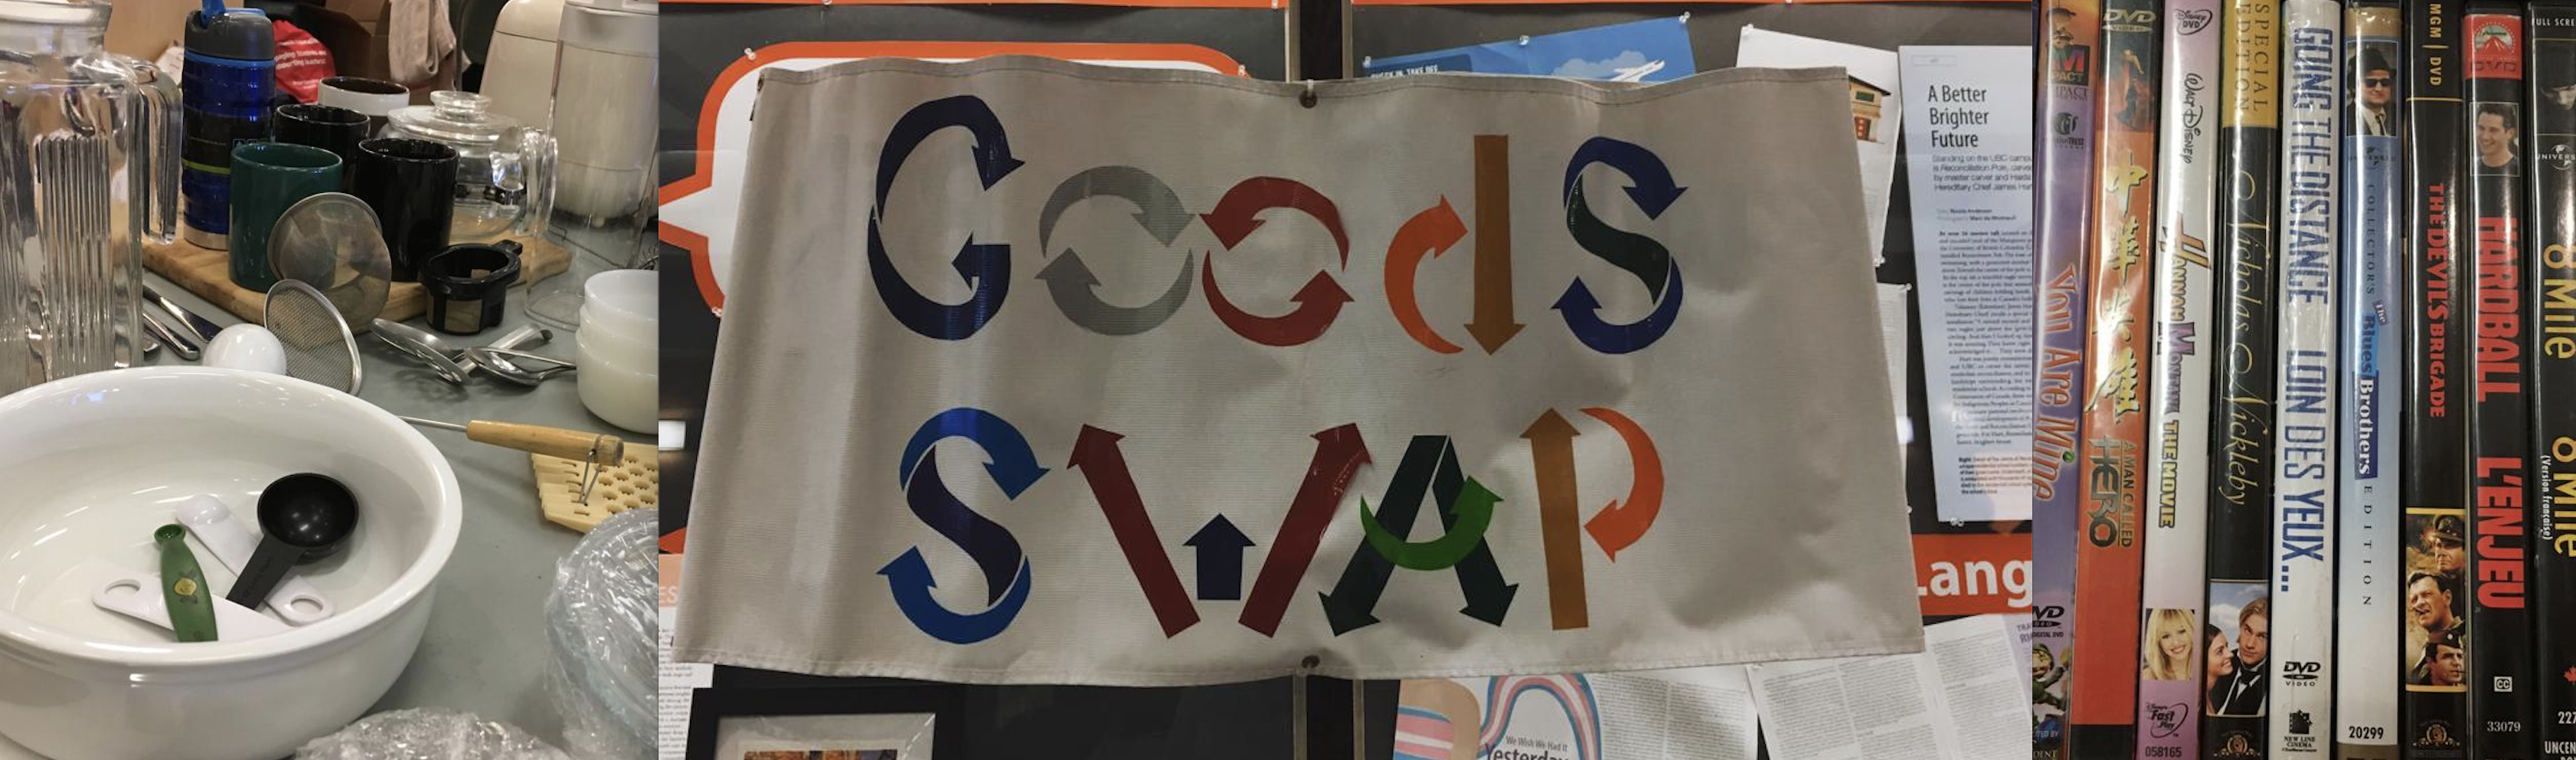 Goods Swap Wrap Up